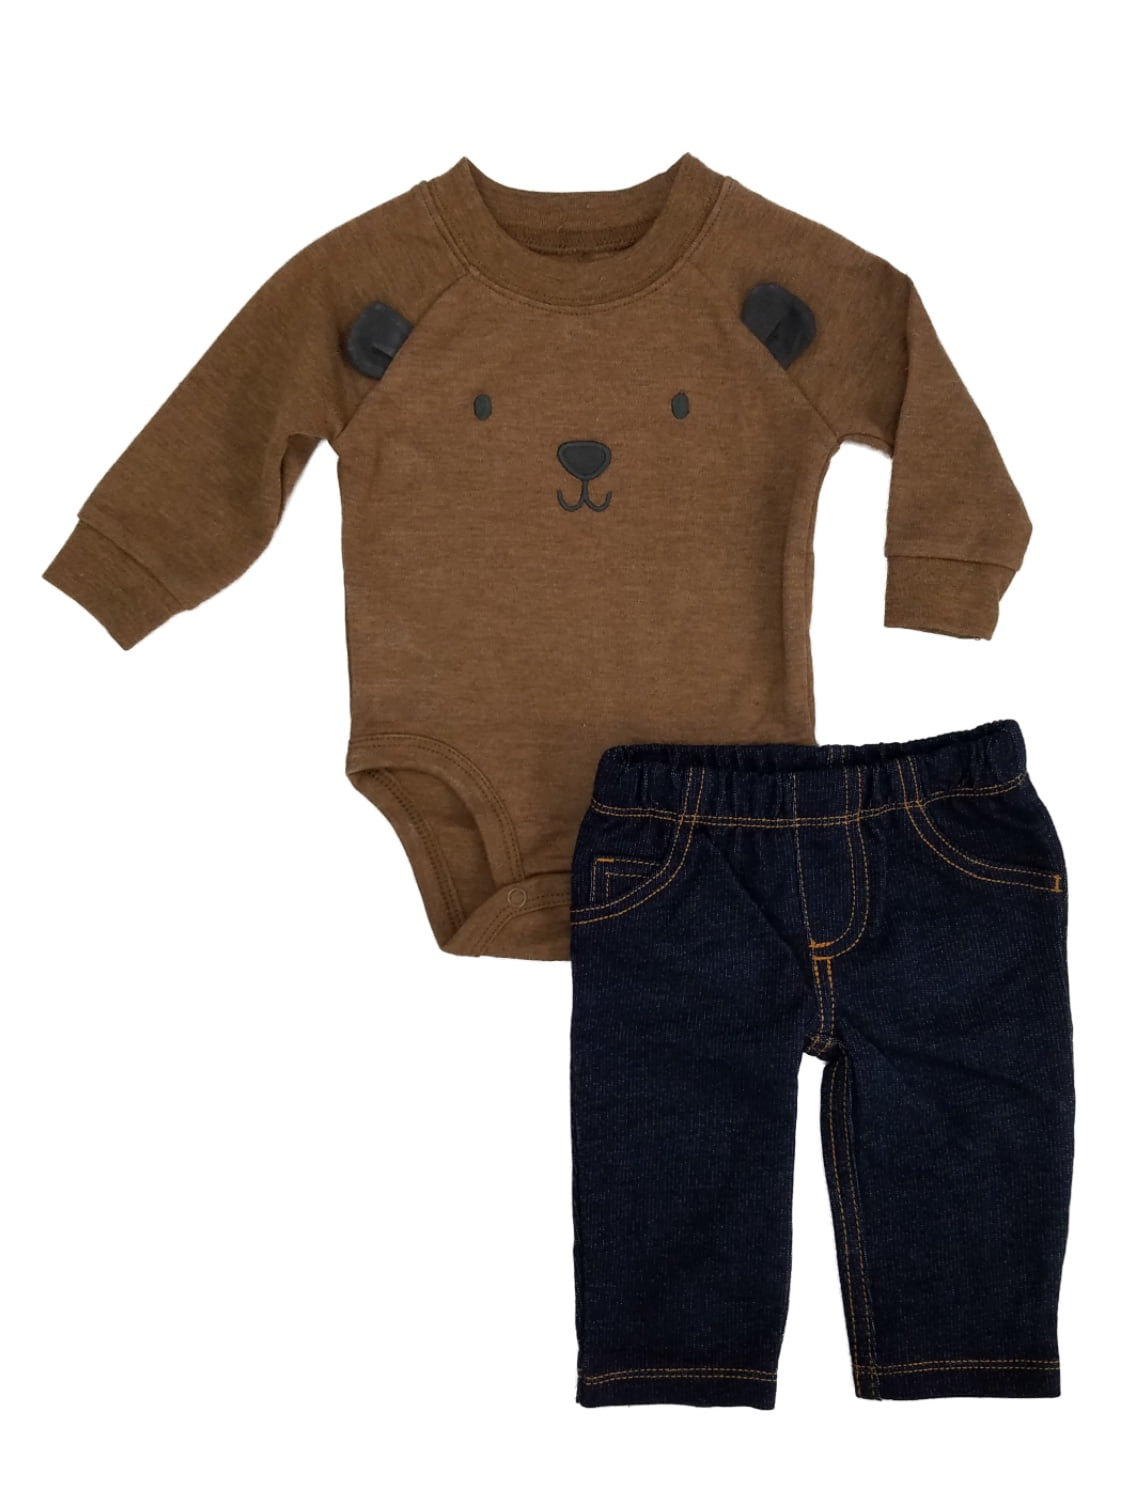 New Carter's Boys 2 Piece Bodysuit Teddy Bear Top & Faux Blue Jean Set 6 12m 24m